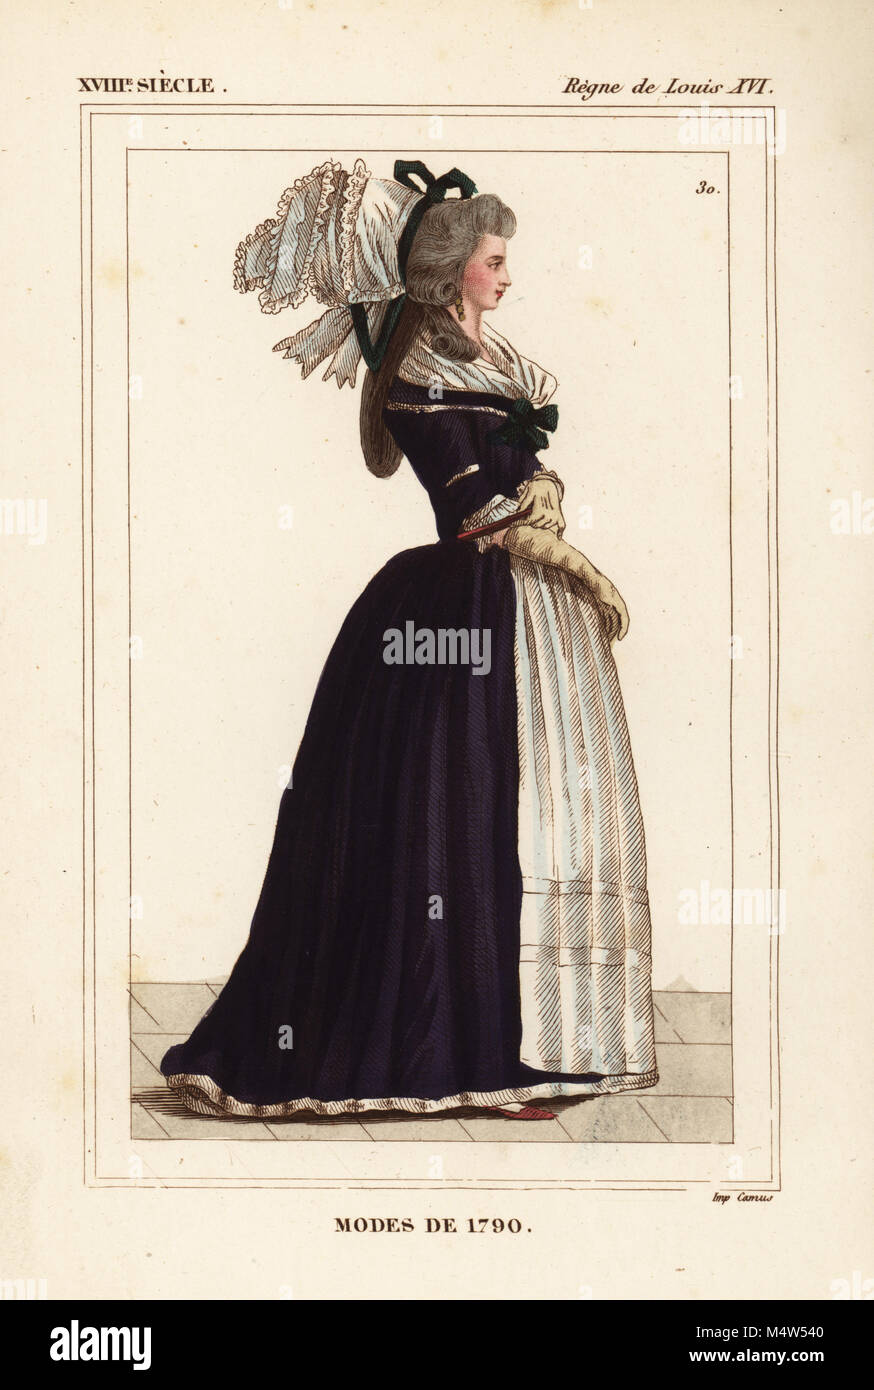 French women's fashions of 1790: with milkmaid's bonnet, bonnet a la Stock  Photo - Alamy